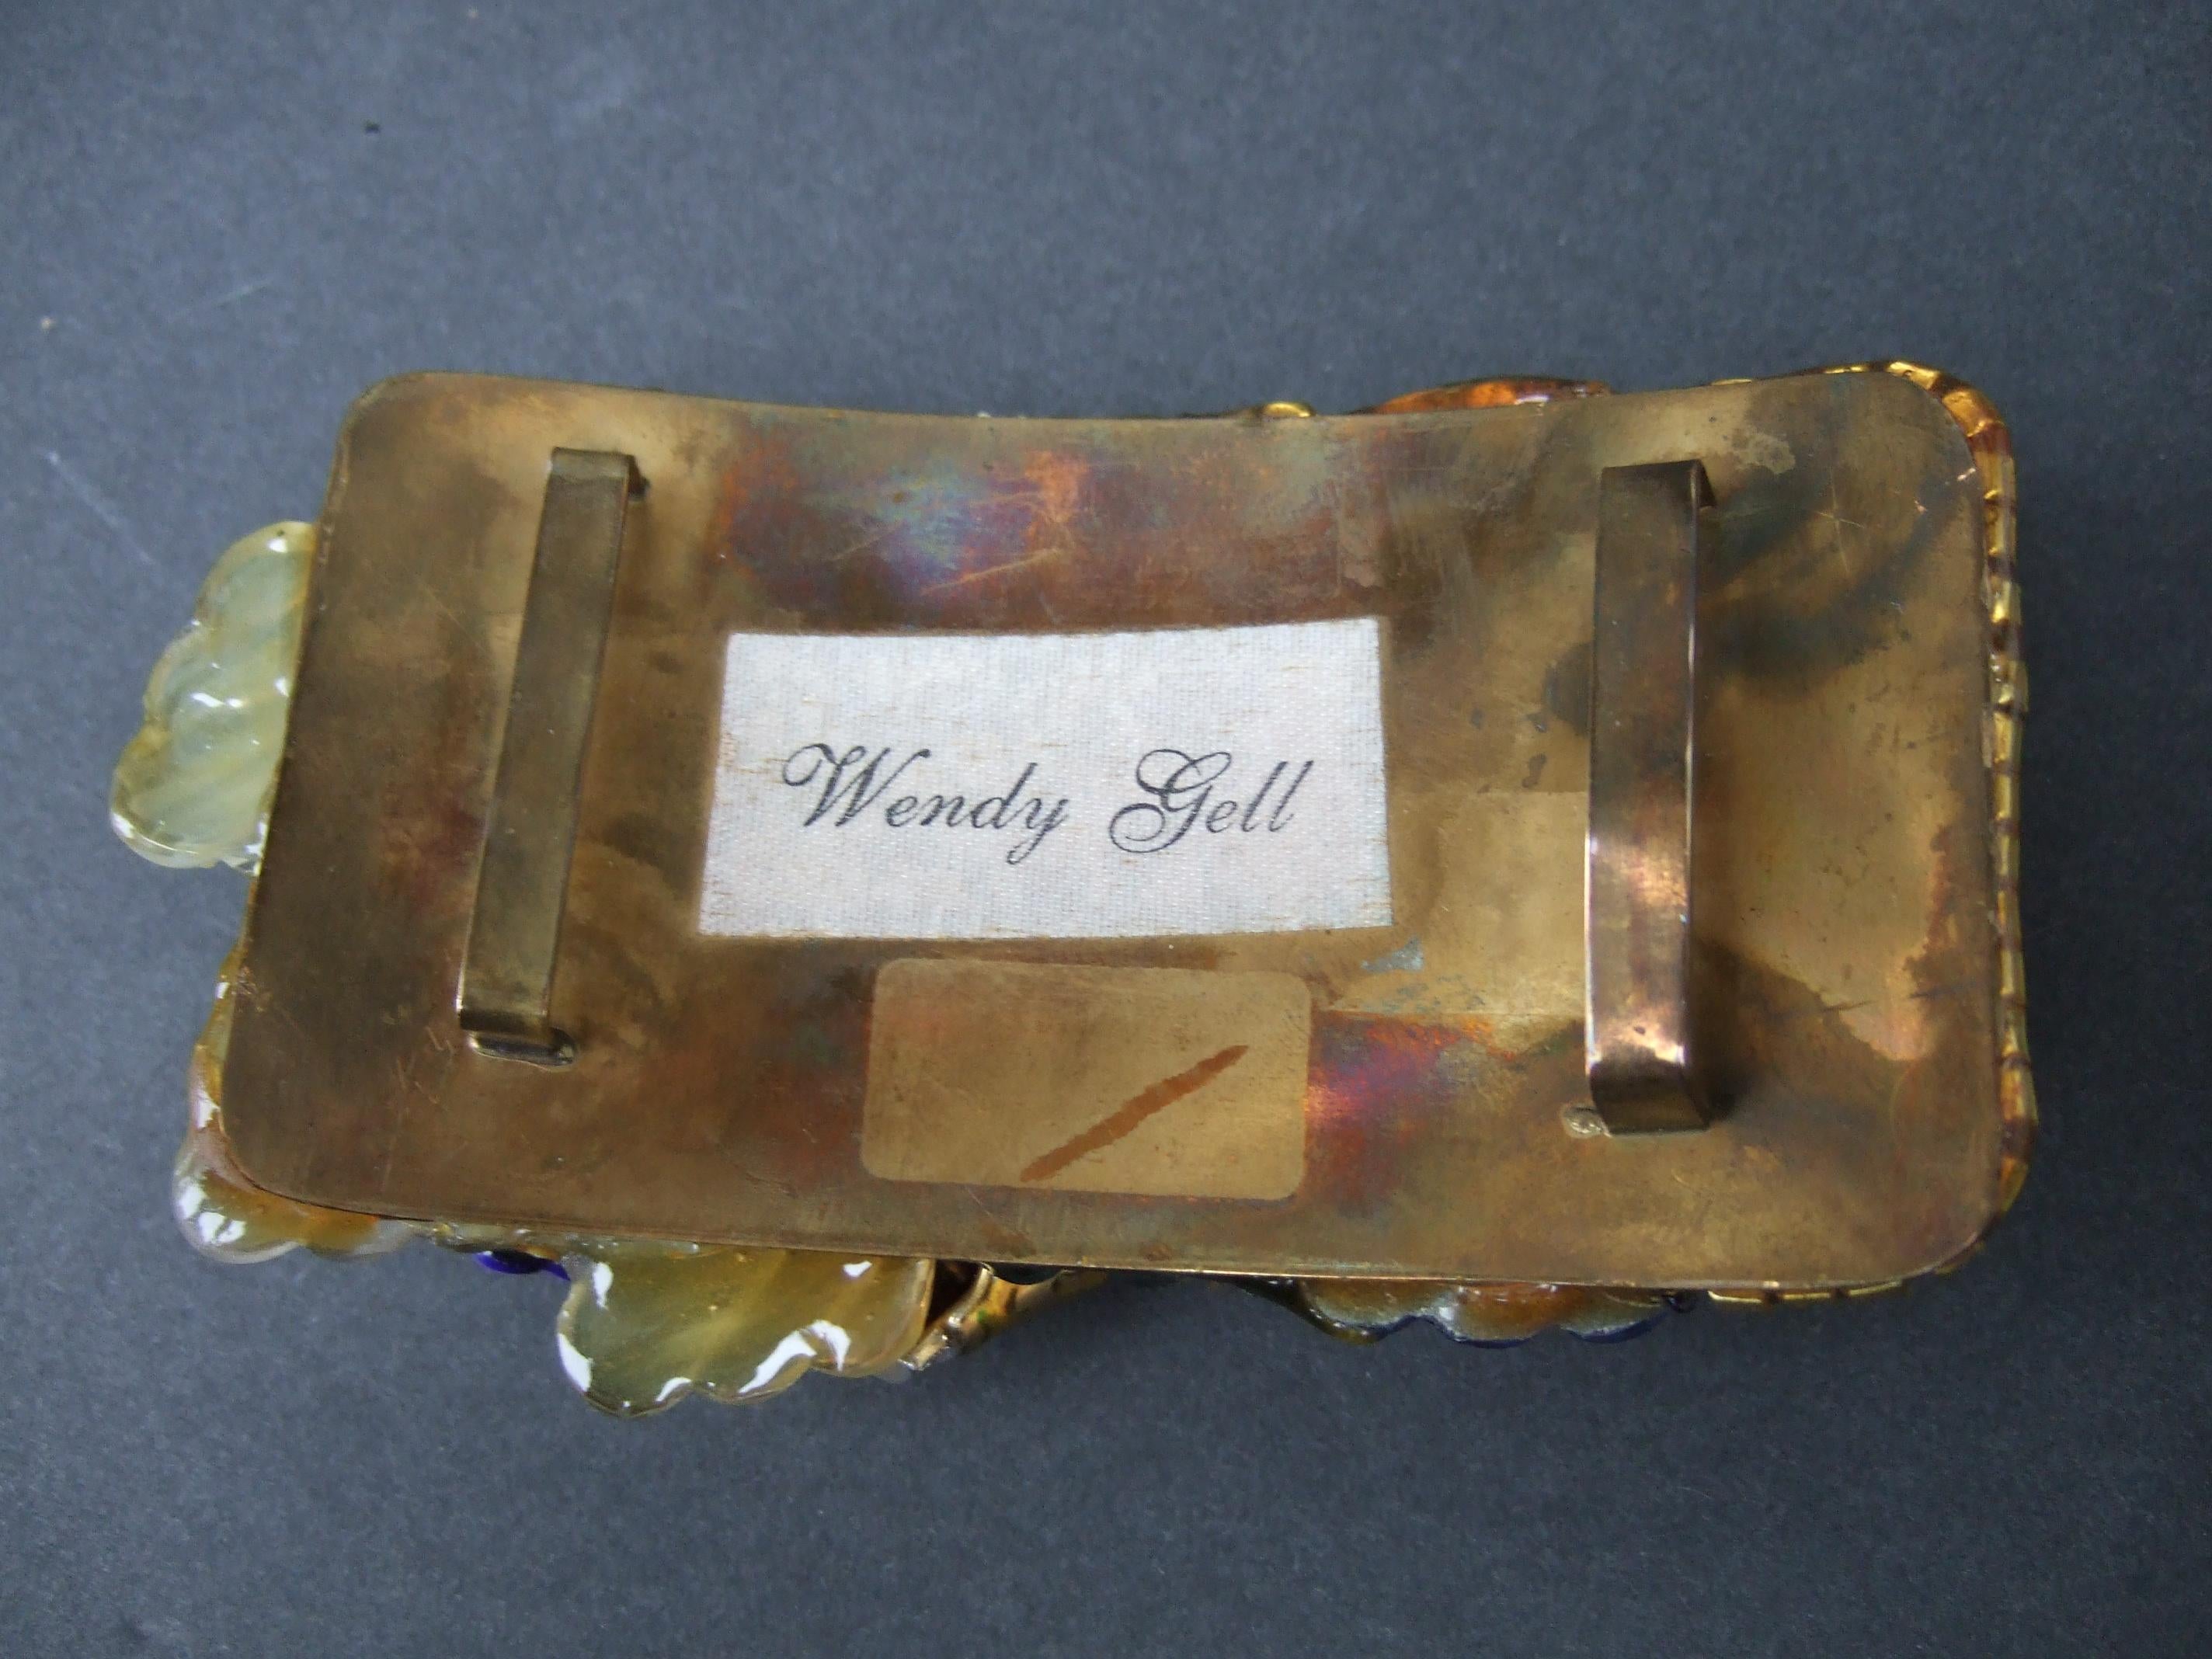 Wendy Gill Crystal Encrusted Repurposed Artisan Belt Buckle c 1980s For Sale 3